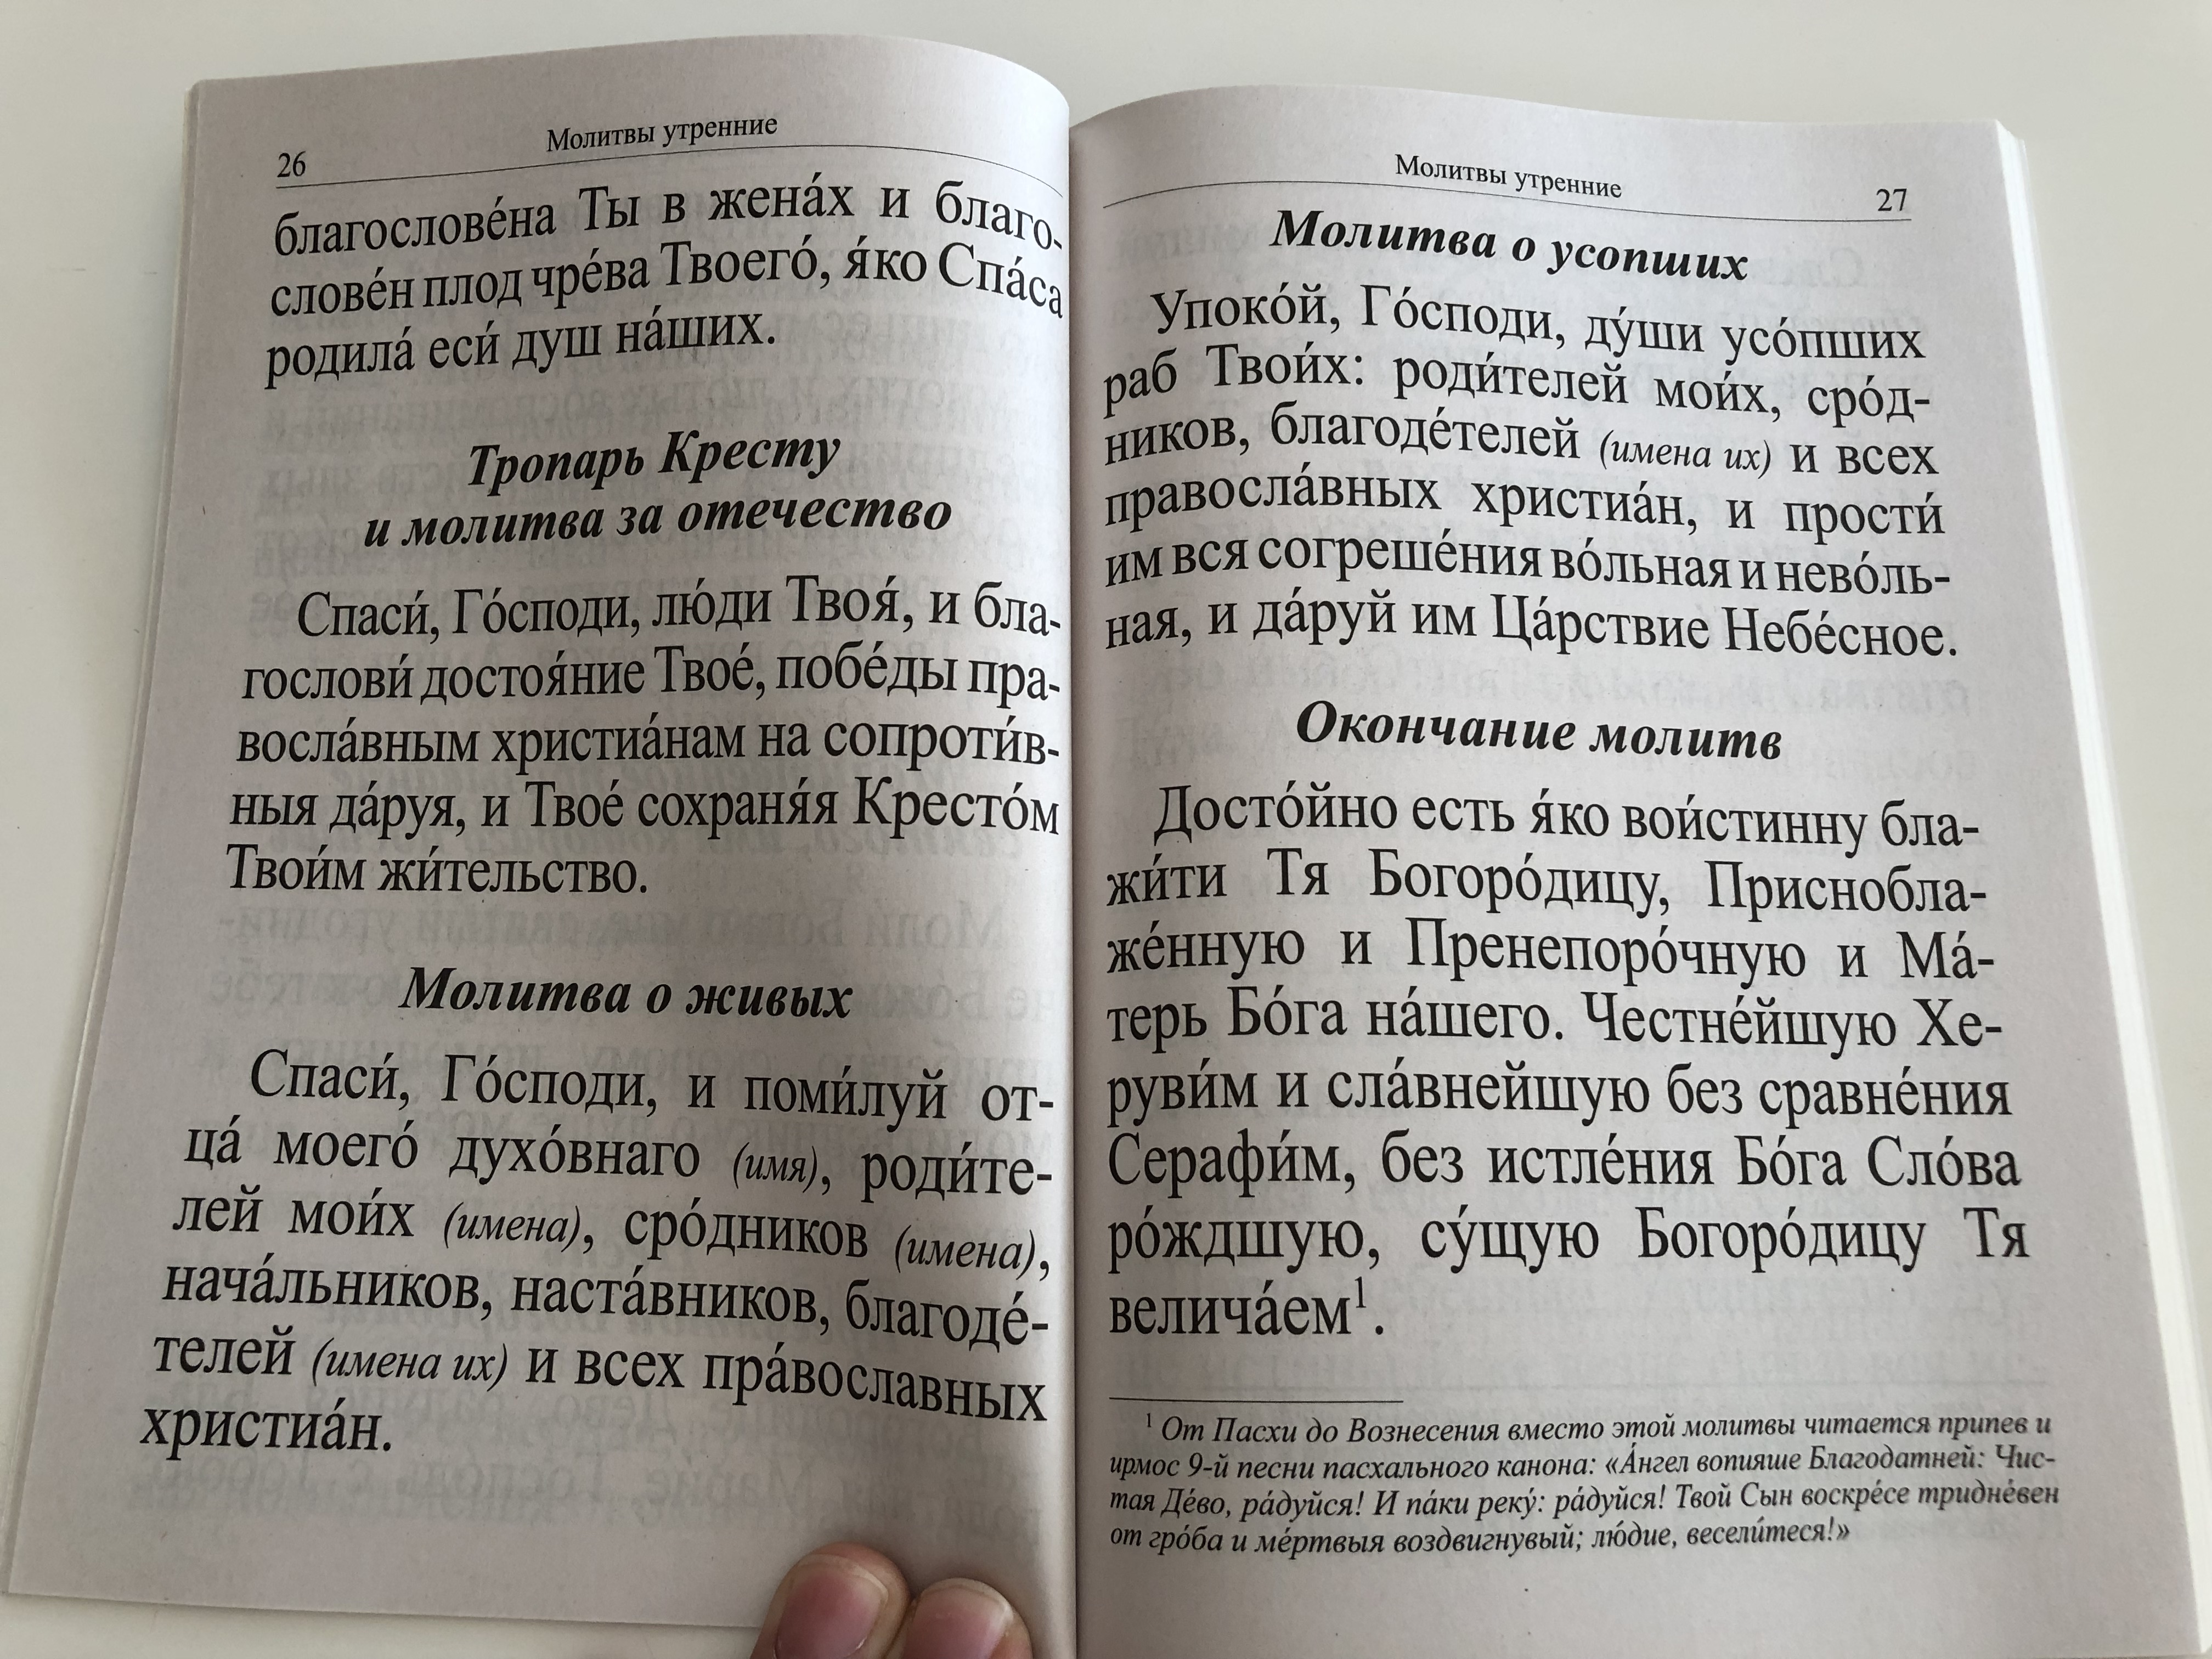 -large-print-russian-orthodox-prayer-book-hardcover-2016-5-.jpg